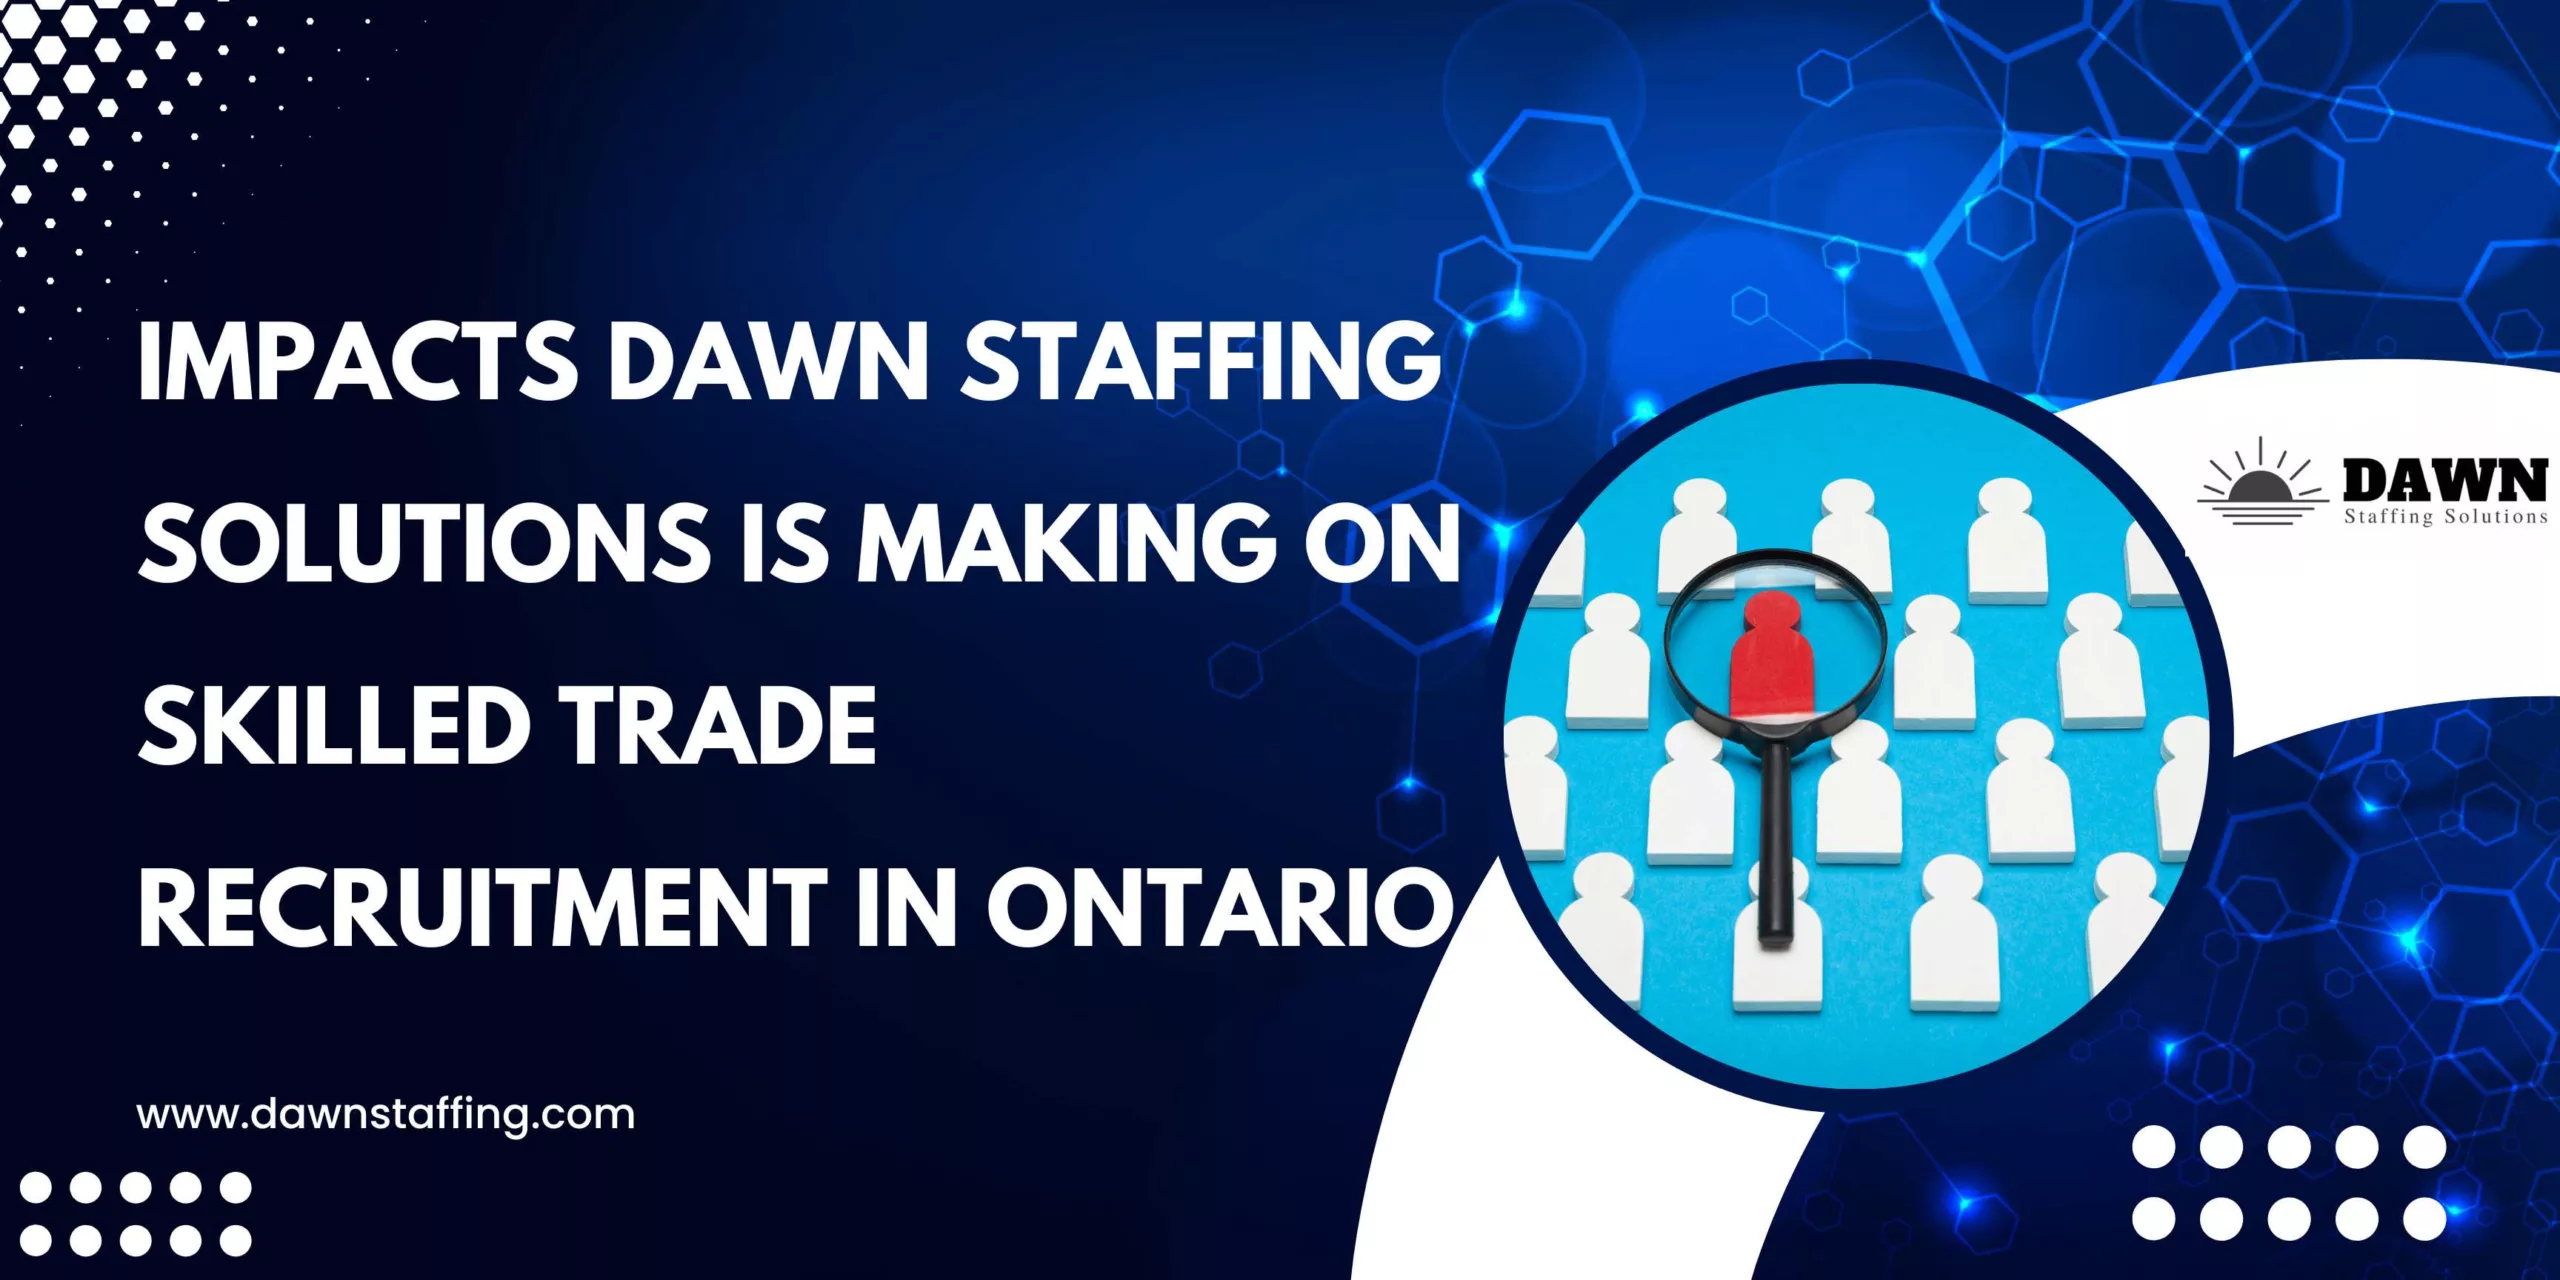 Skilled trade Recruitment in Ontario